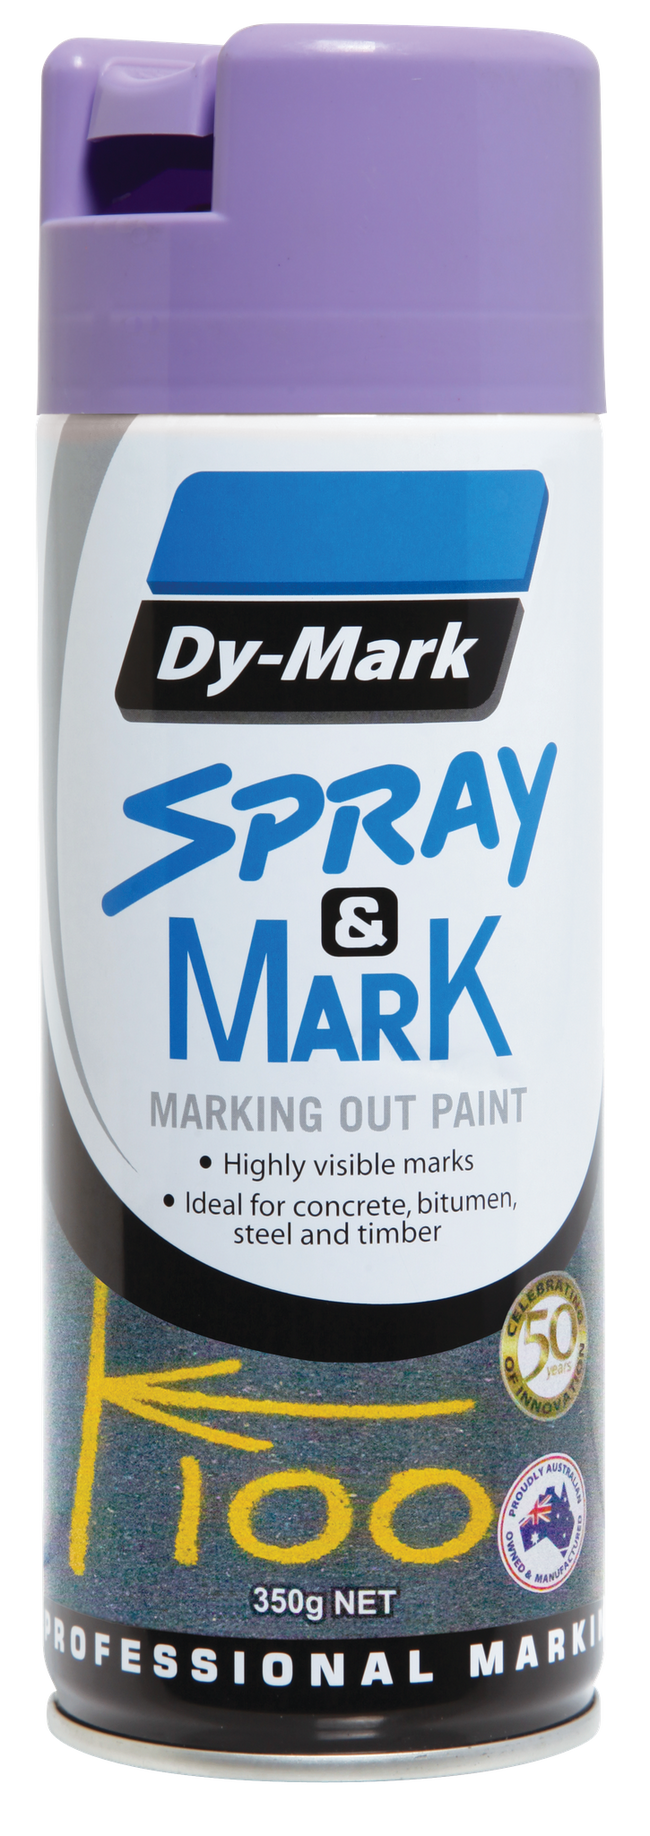 DY-MARK Spray & Mark Survey Linemarking Spray Paint Violet 350g Aerosol